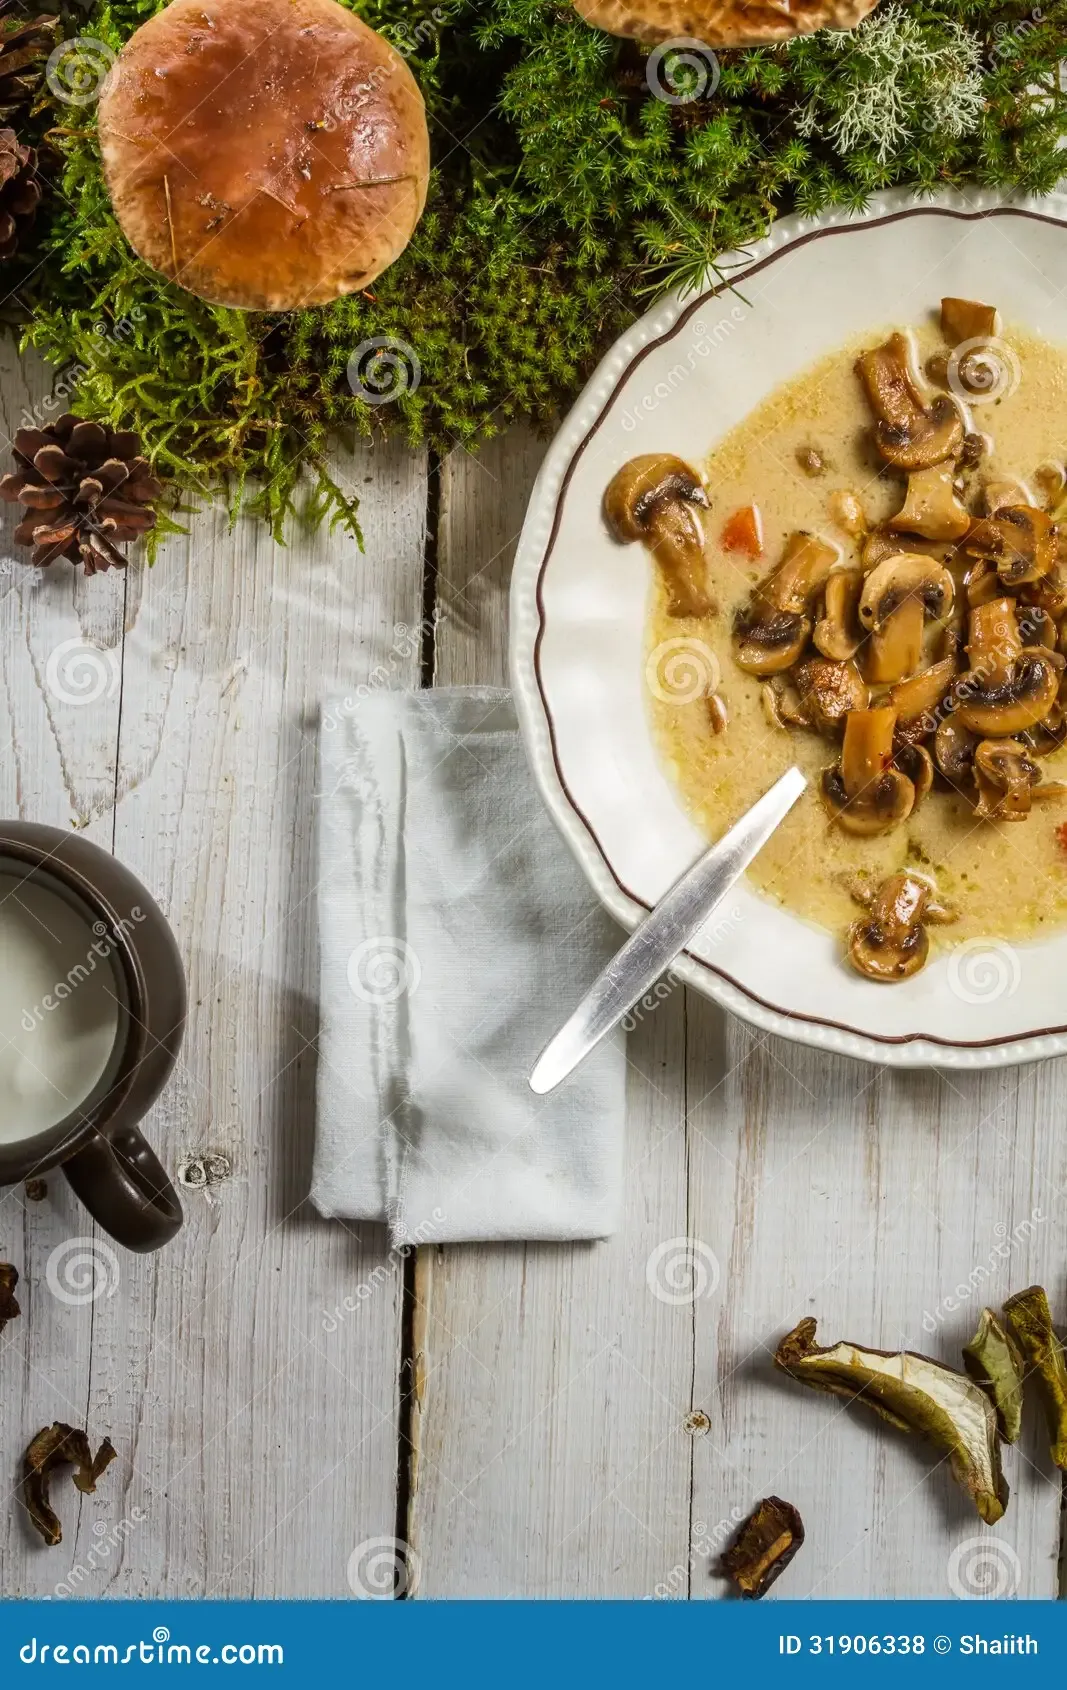 wild-mushroom-soup-moss-old-table-31906338.jpg